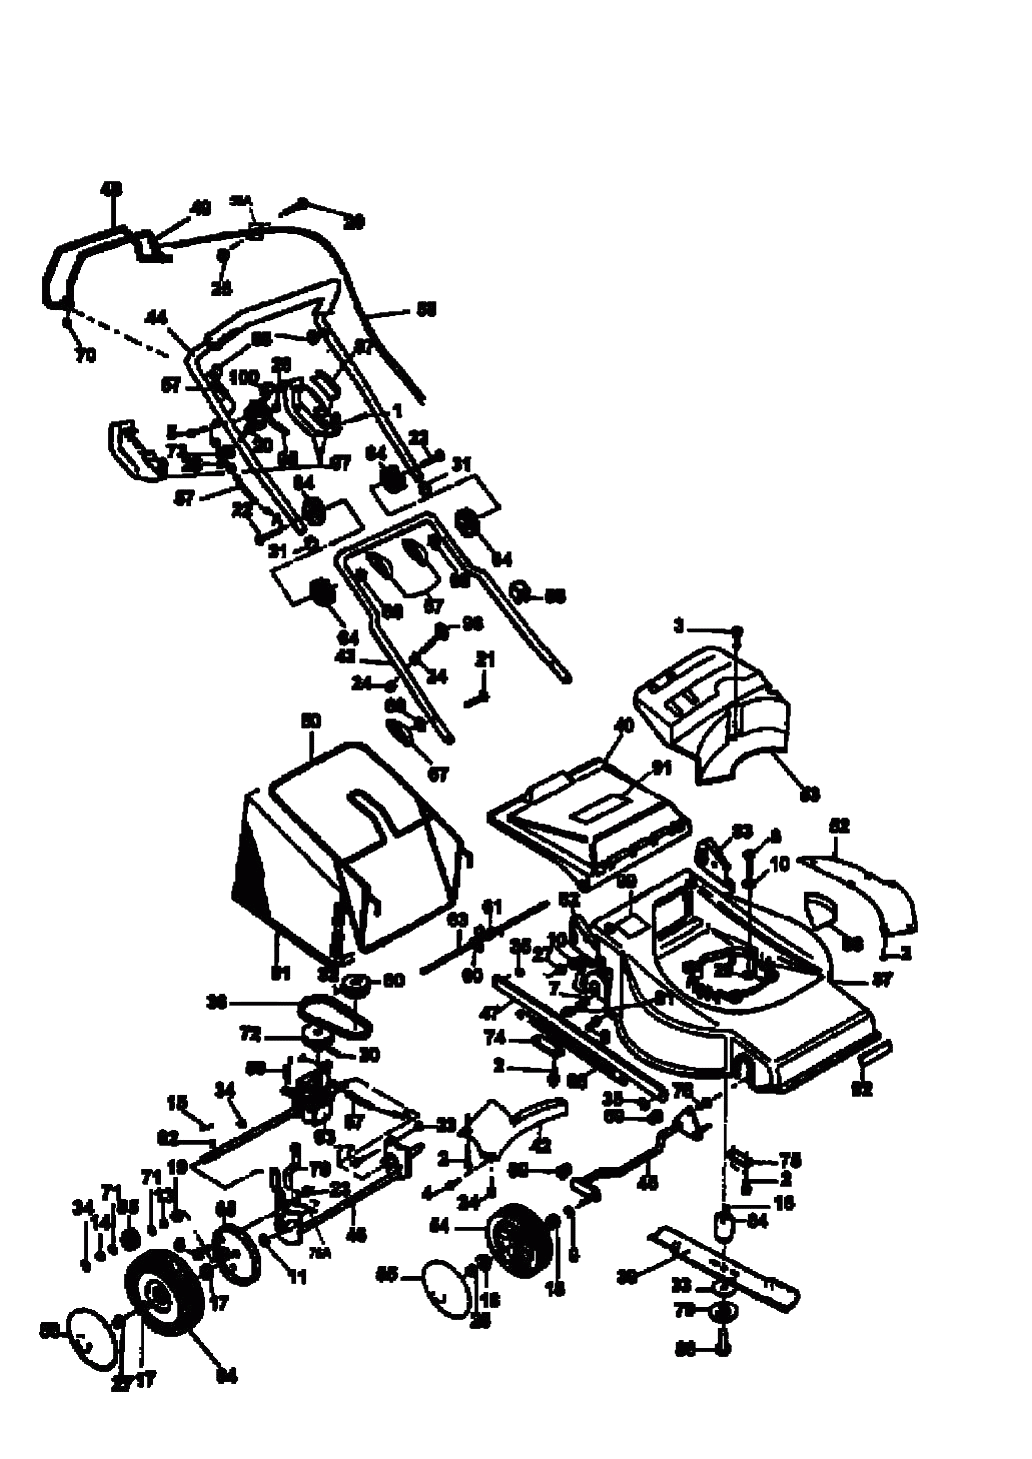 MTD Артикул GX50SB678 (год выпуска 1997). Основная деталировка